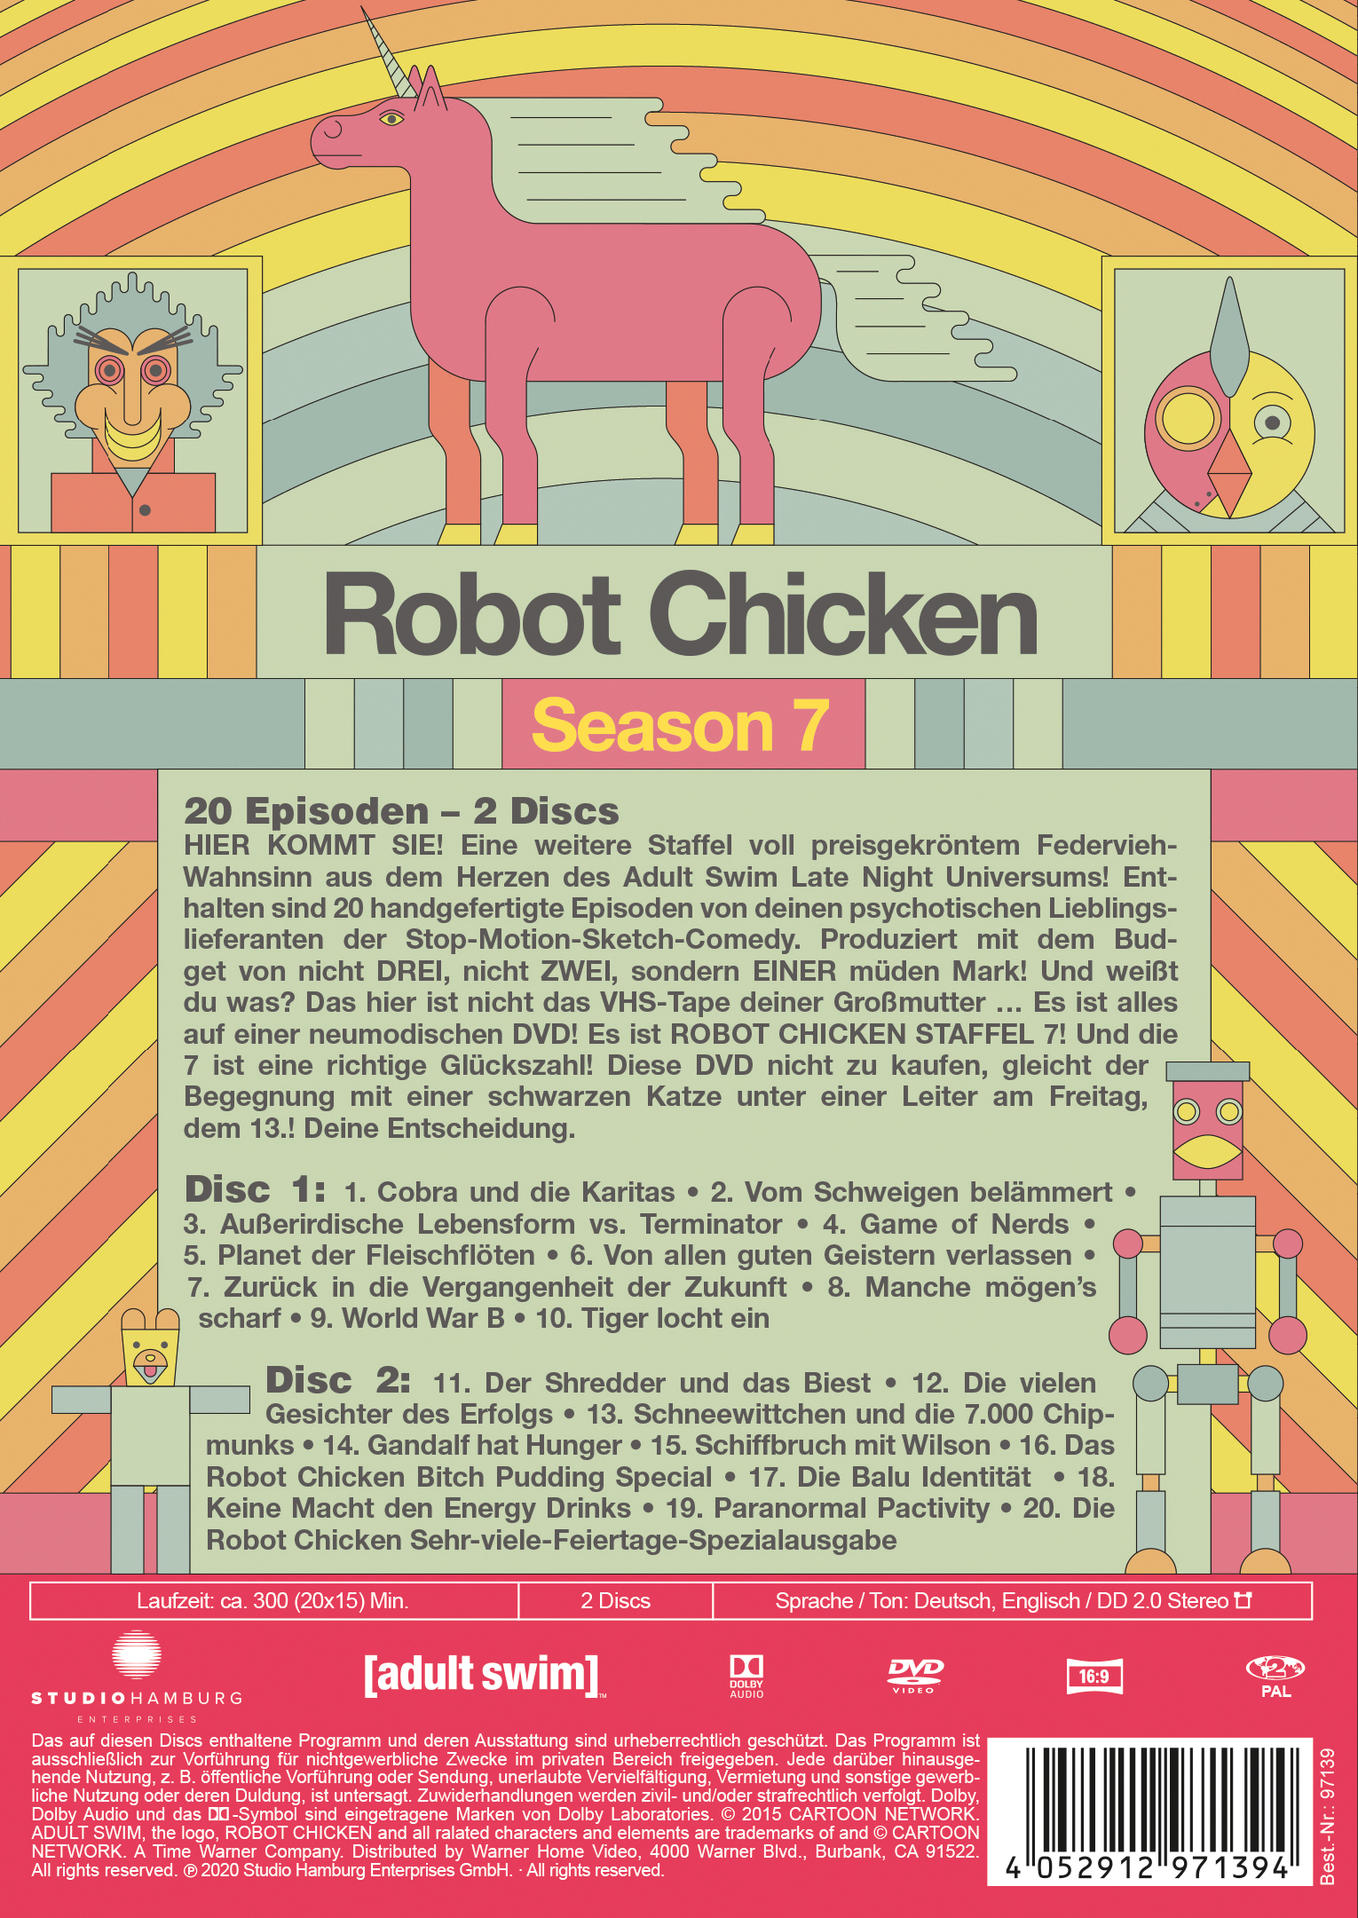 Robot Chicken: Season 7 DVD